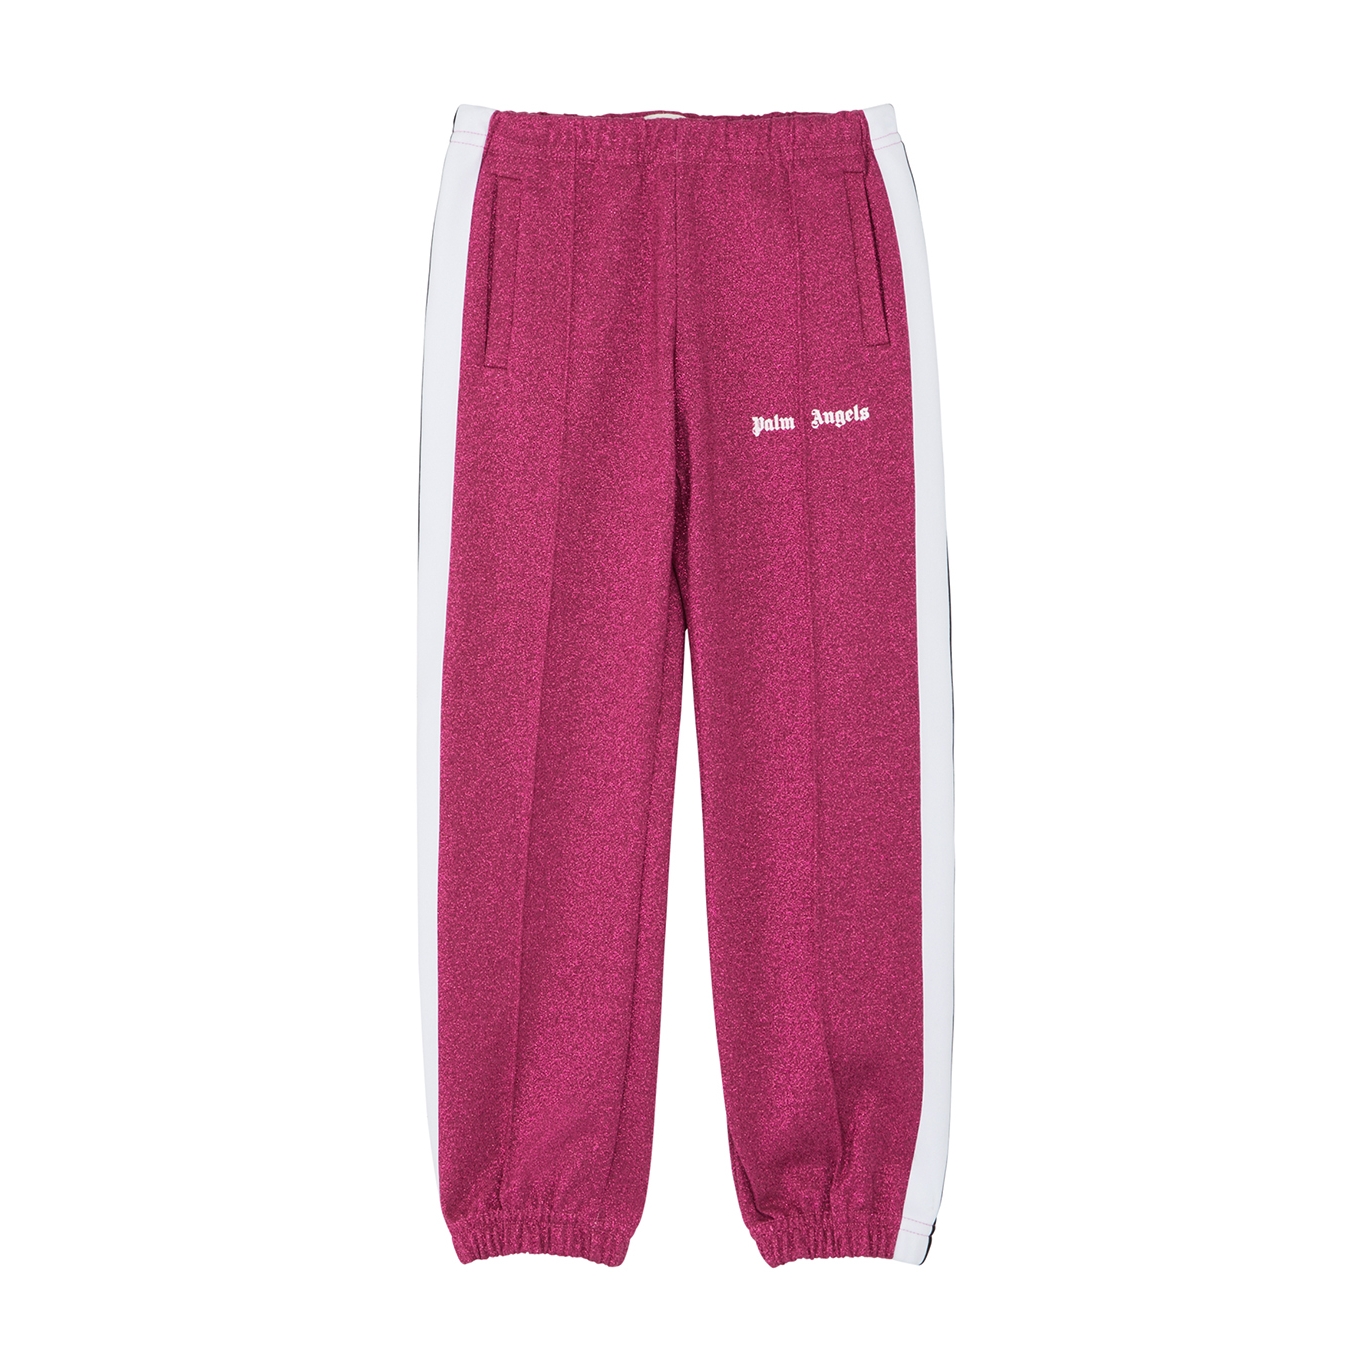 Palm Angels Kids Pink Glittered Jersey Track Pants (4-10 Years) - Fuchsia - 4 Years